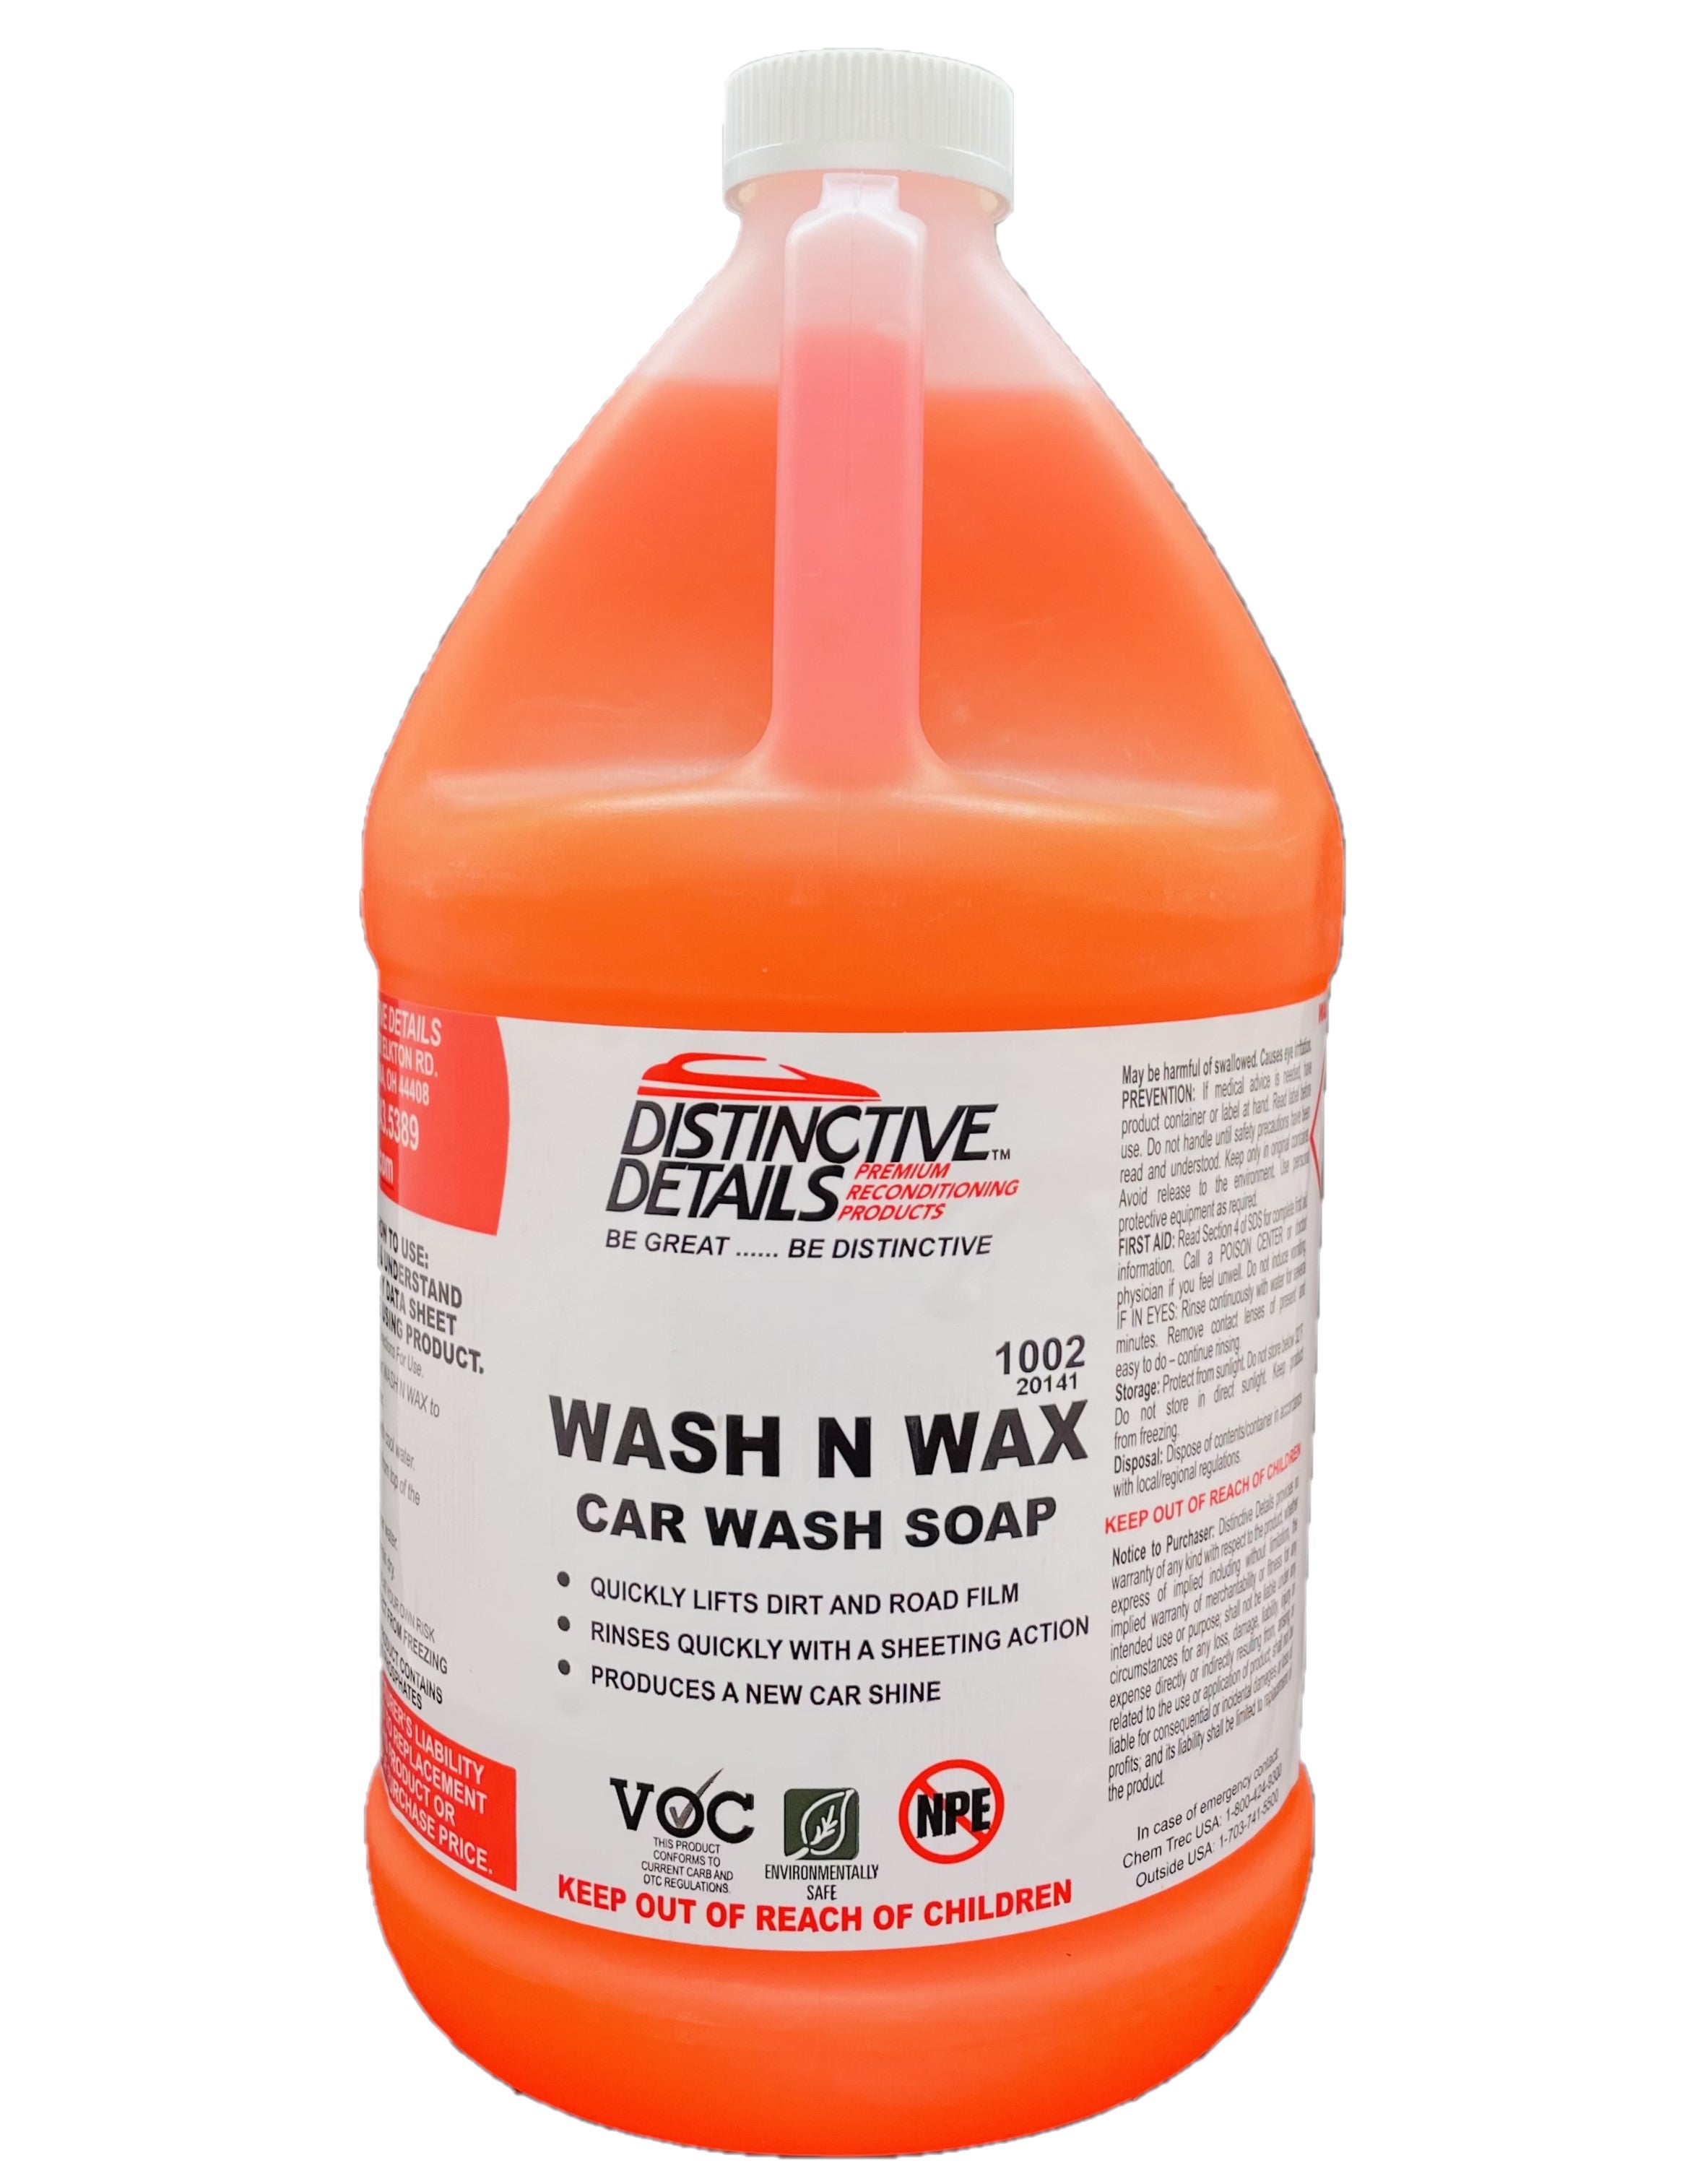 The bomb wash n wax soap